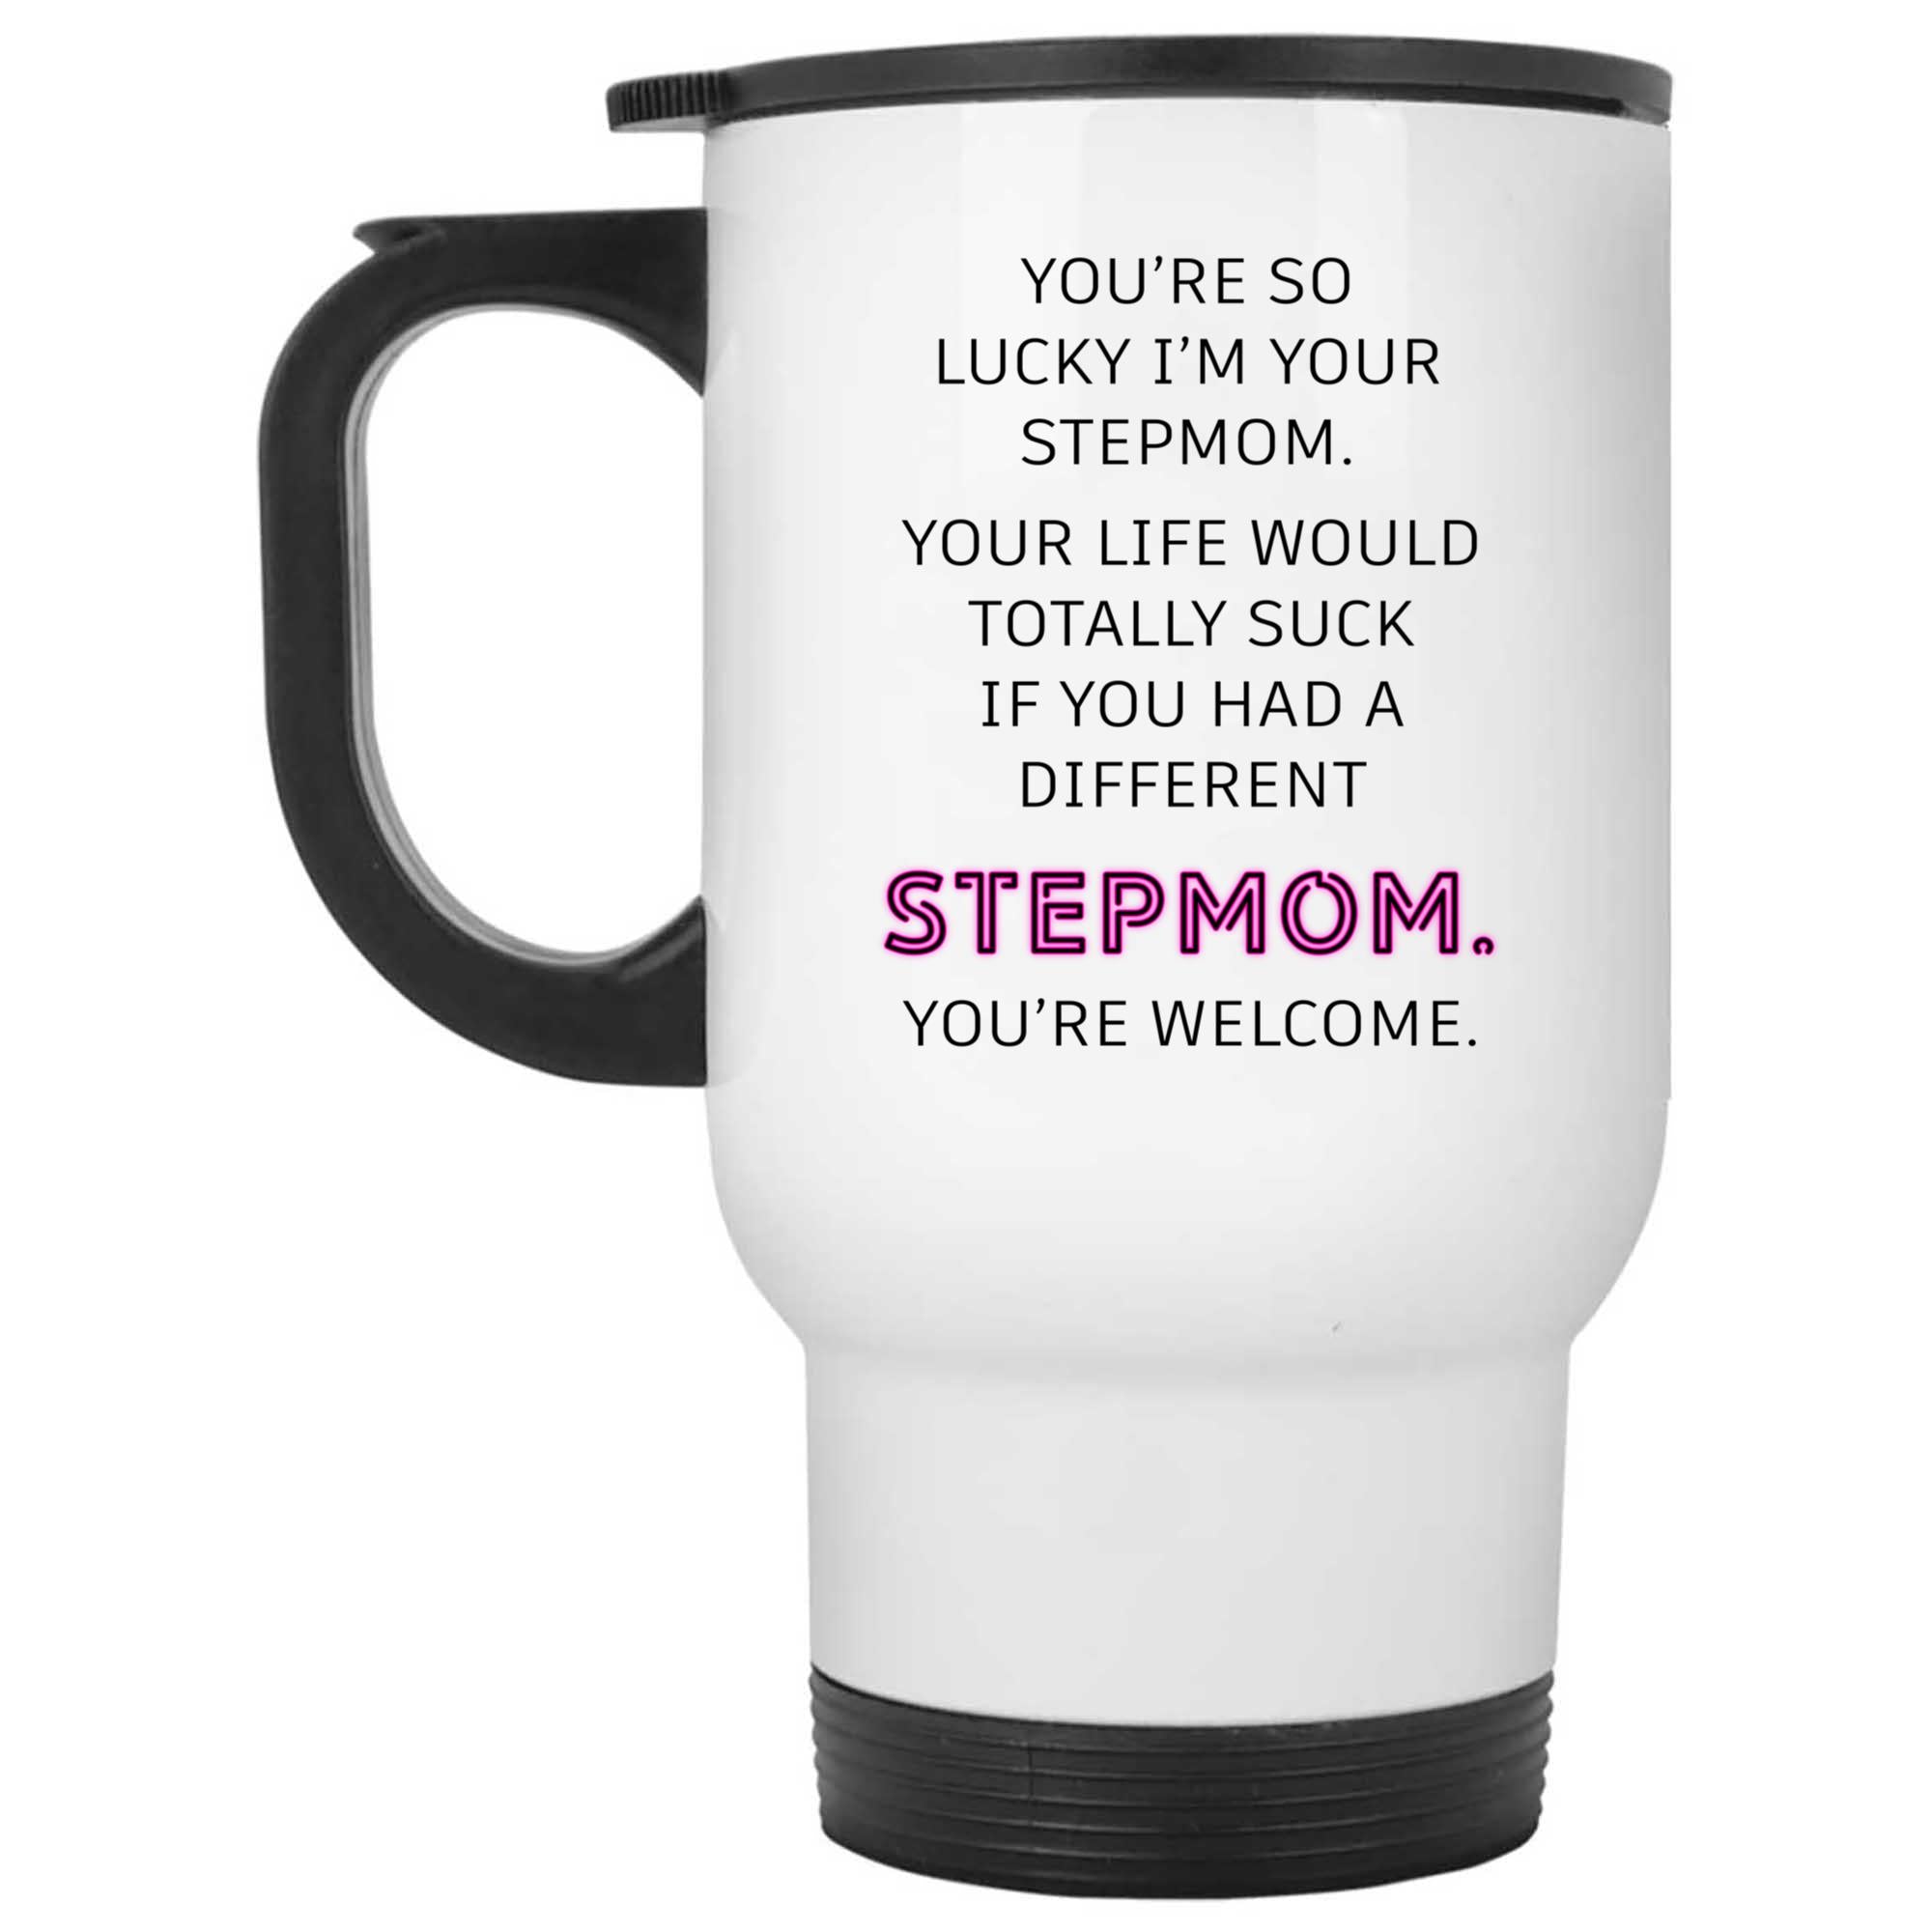 Skitongifts Funny Ceramic Coffee Mug Novelty M42-Lh041221_Stepdaughter From Stepmom Sarcastic_White Mug Pfjtmvj